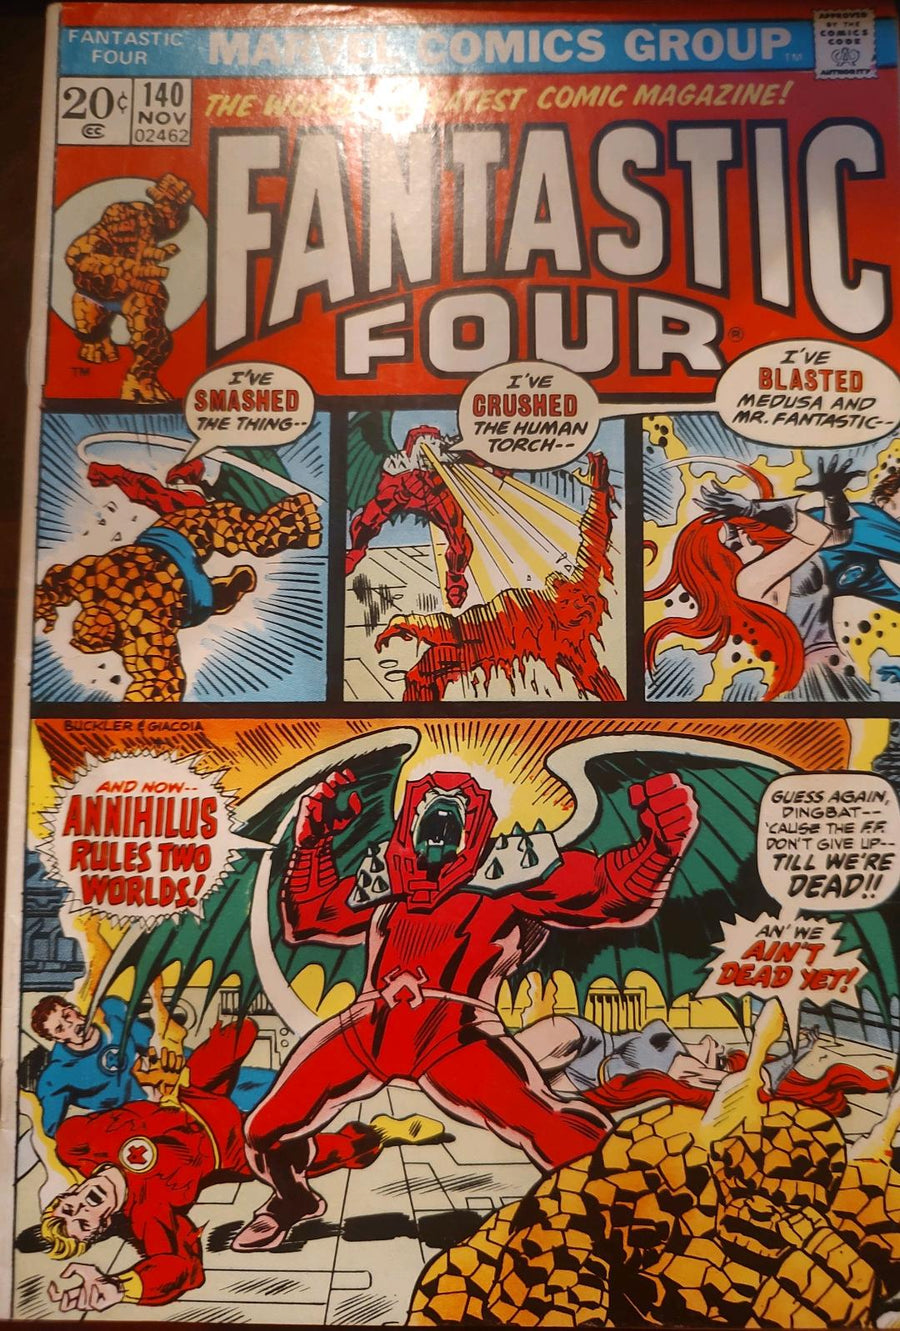 Fantastic Four #140 Comic Book Cover